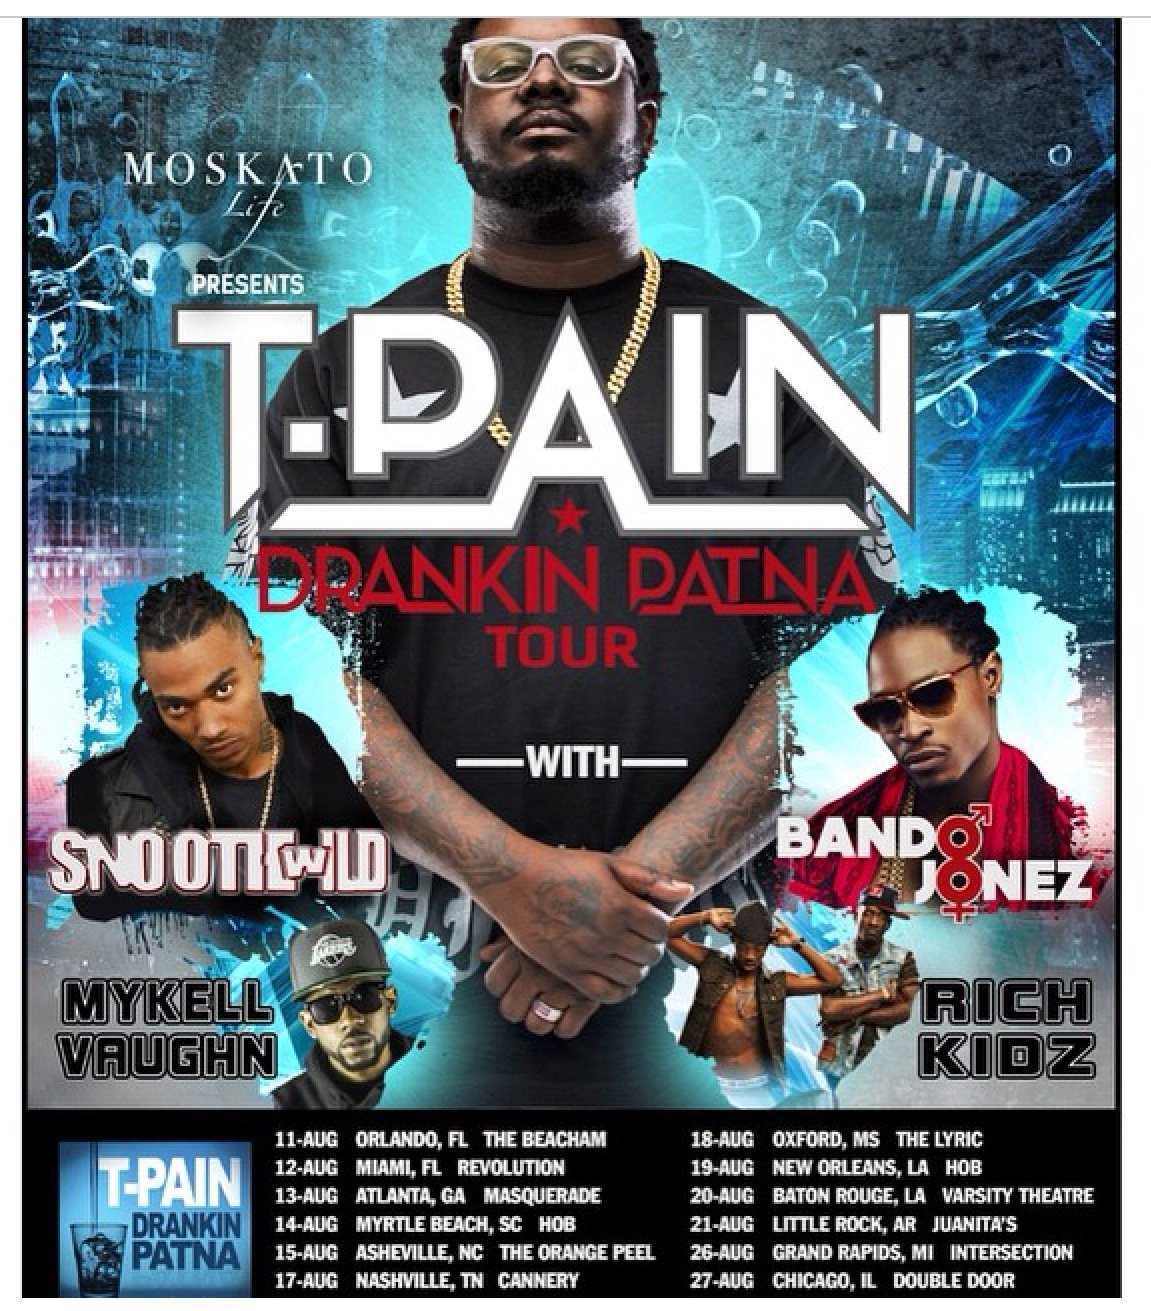 TPain Tour Dates Starring Snootie Wild, Bando Jonez and More